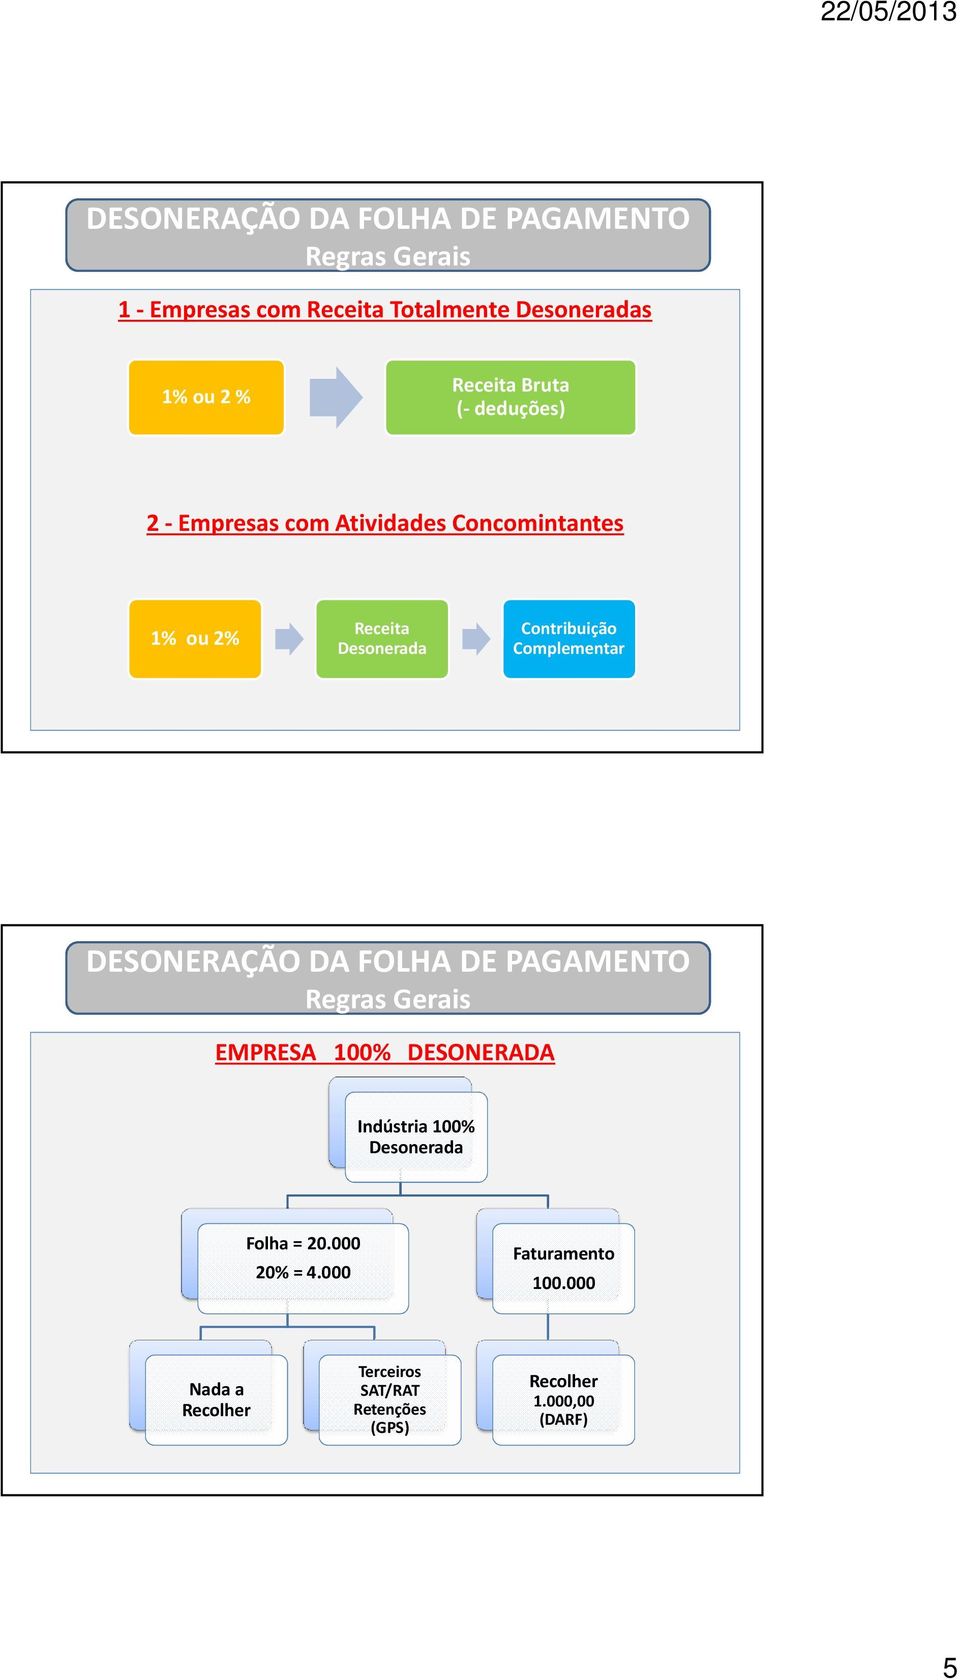 Complementar Regras Gerais EMPRESA 100% DESONERADA Indústria 100% Desonerada Folha = 20.